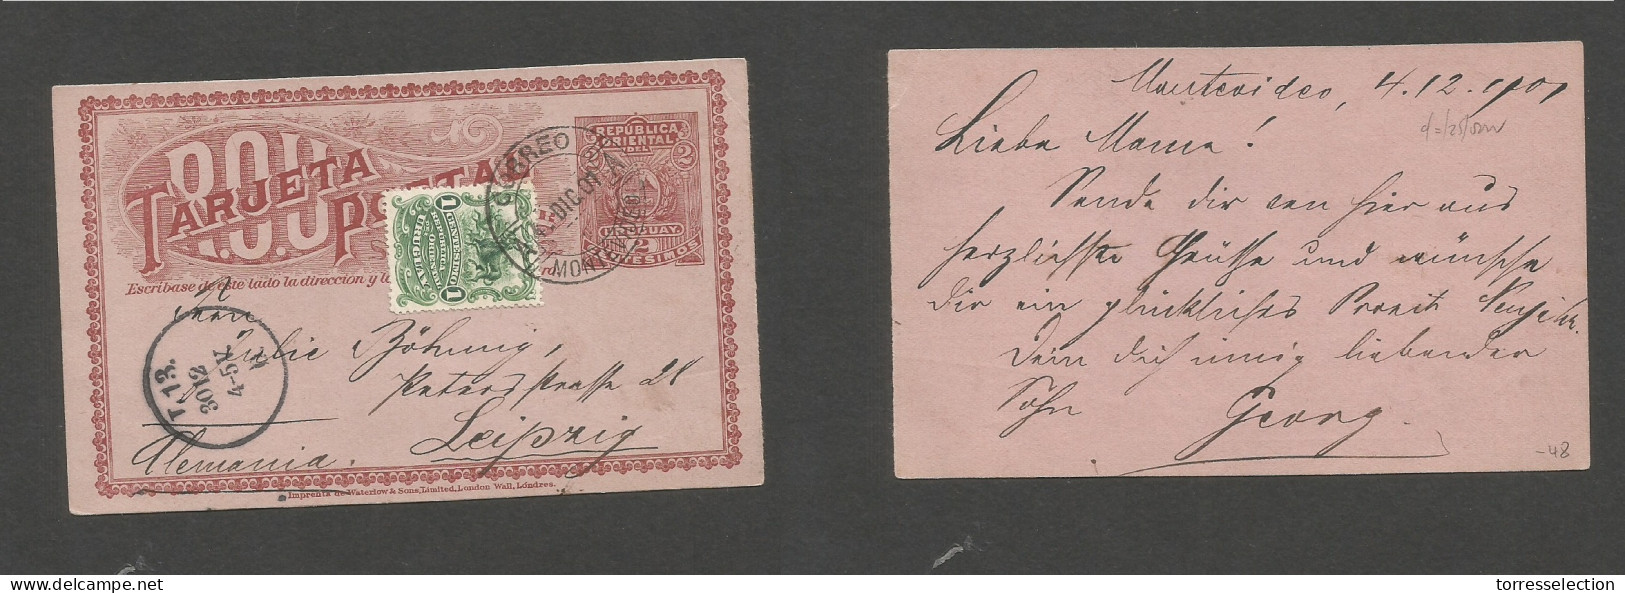 URUGUAY. 1901 (4 Dic) Mont - Leipzig, Germany (30 Dic) 2c Brown / Creamish + Adtl Stat Card. VF Used. - Uruguay